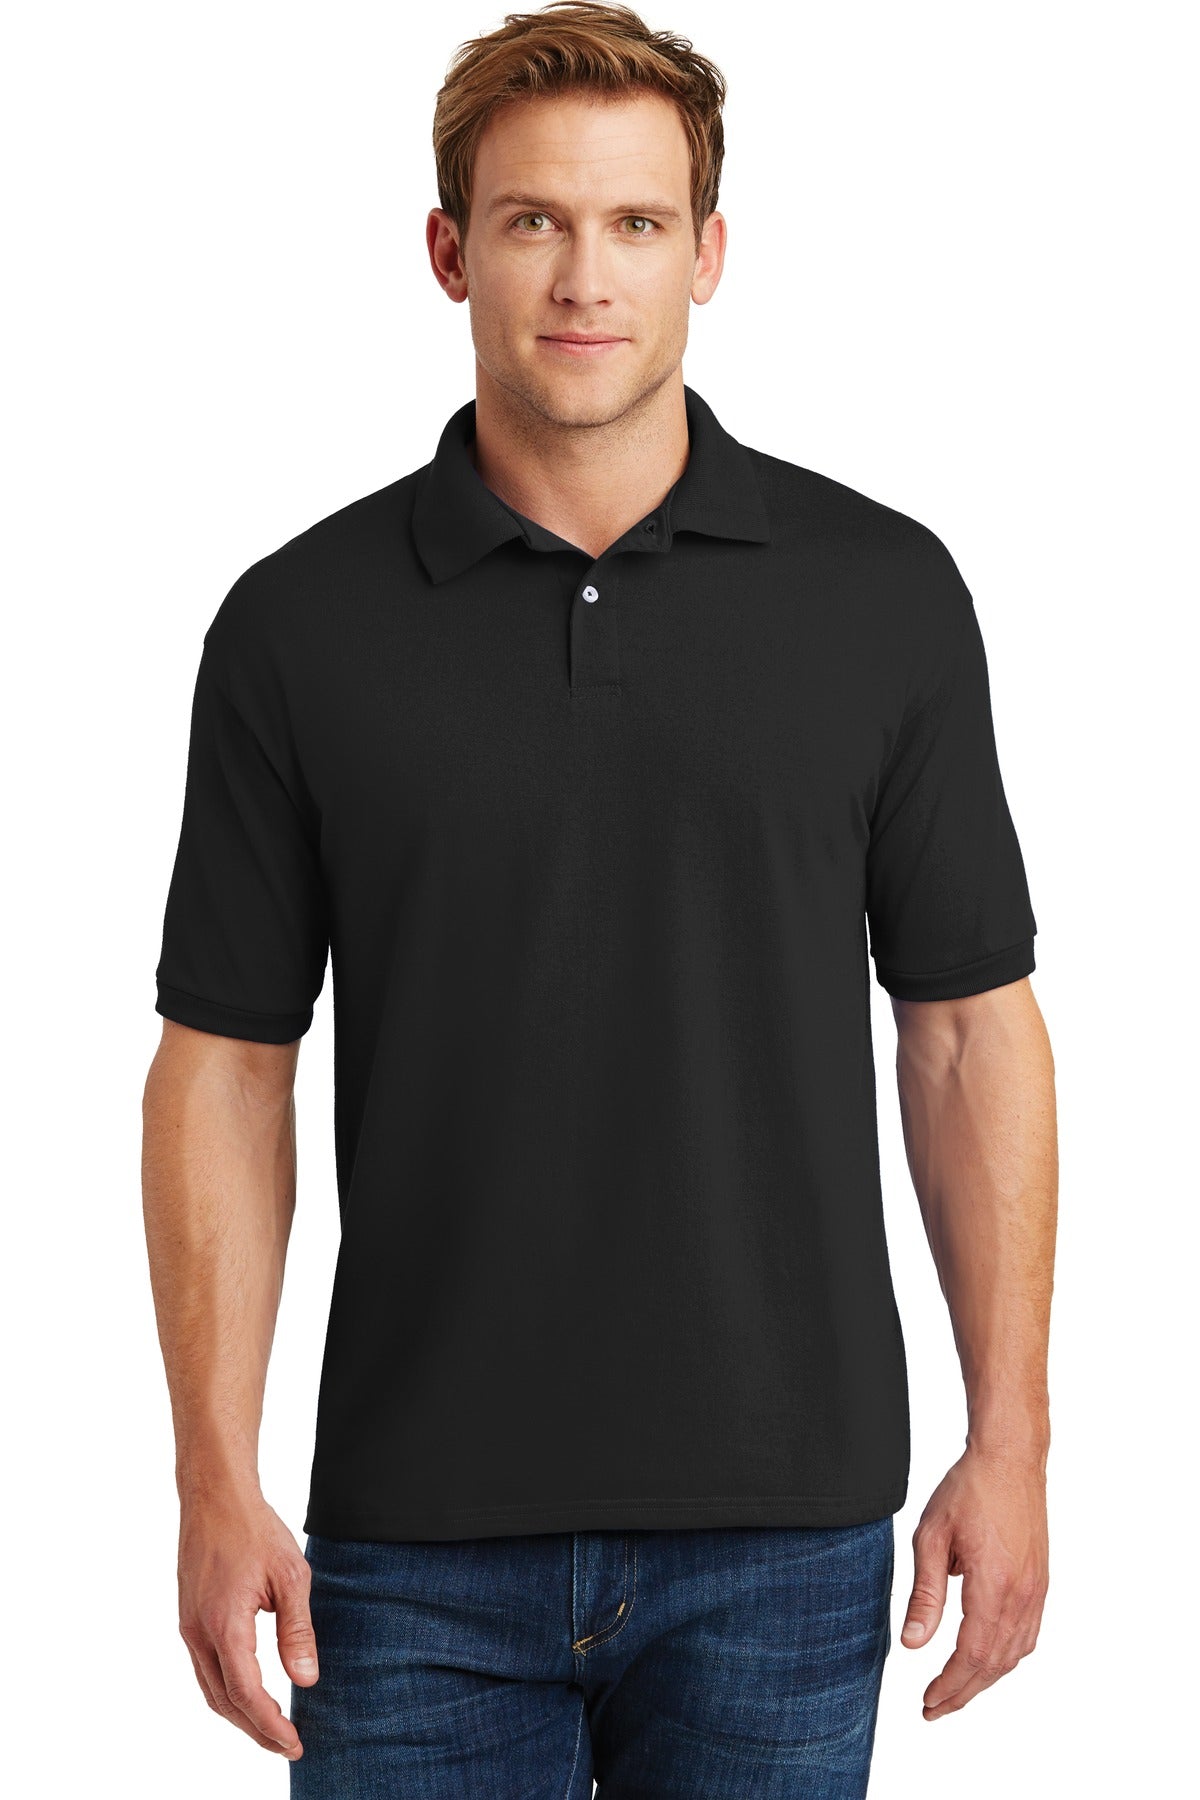 Hanes® EcoSmart® - 5.2-Ounce Jersey Knit Sport Shirt. 054X - DFW Impression